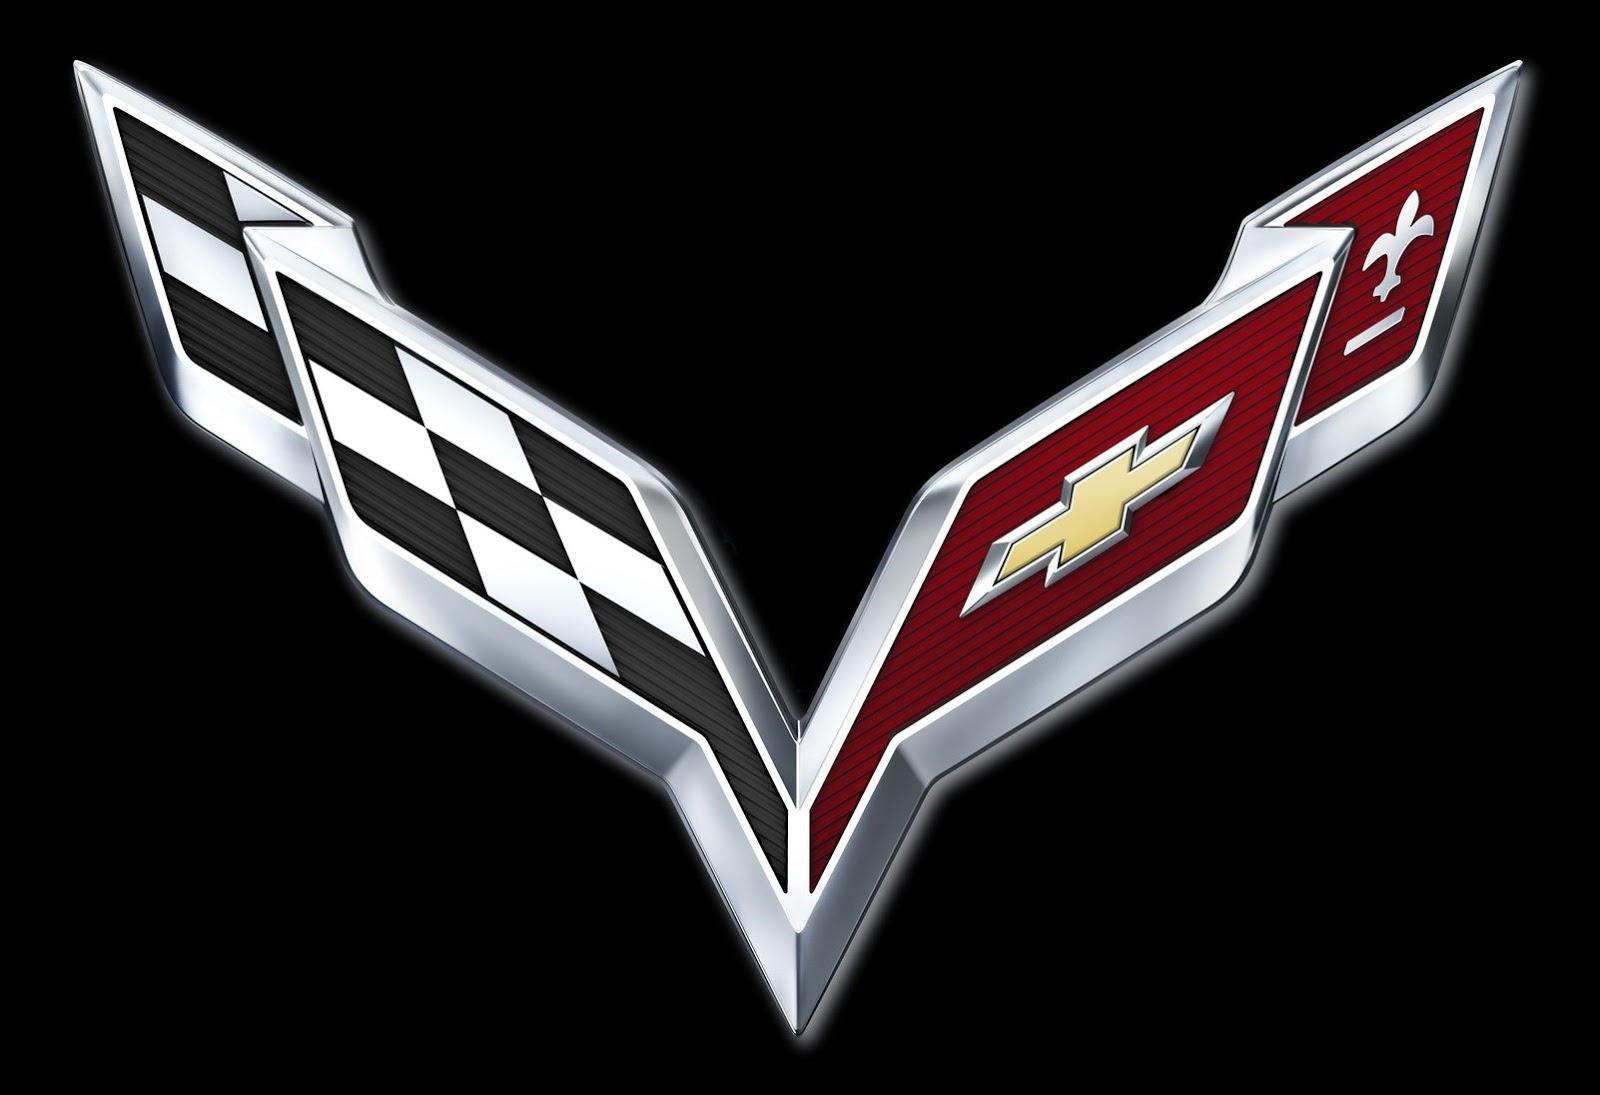 2015 Corvette Logo - GM Reveals 2014 Corvette Logo, Confirms C7 Debut Date